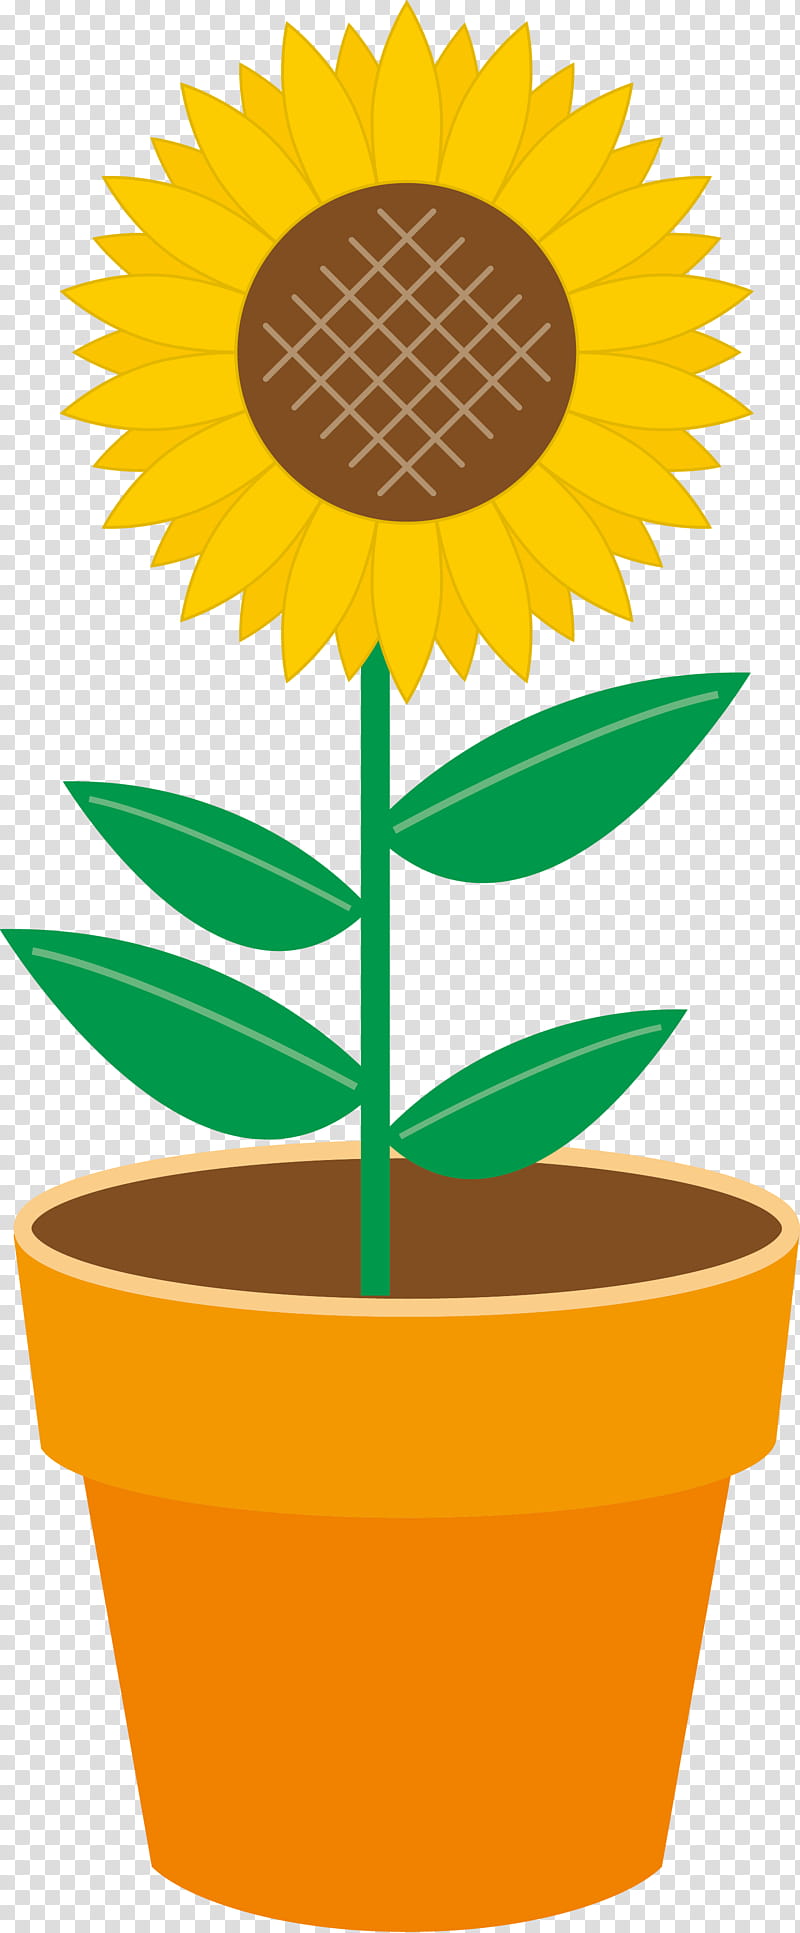 Sunflower, Cartoon, Flowerpot, Yellow, Houseplant, Sunflower Seed, Leaf transparent background PNG clipart